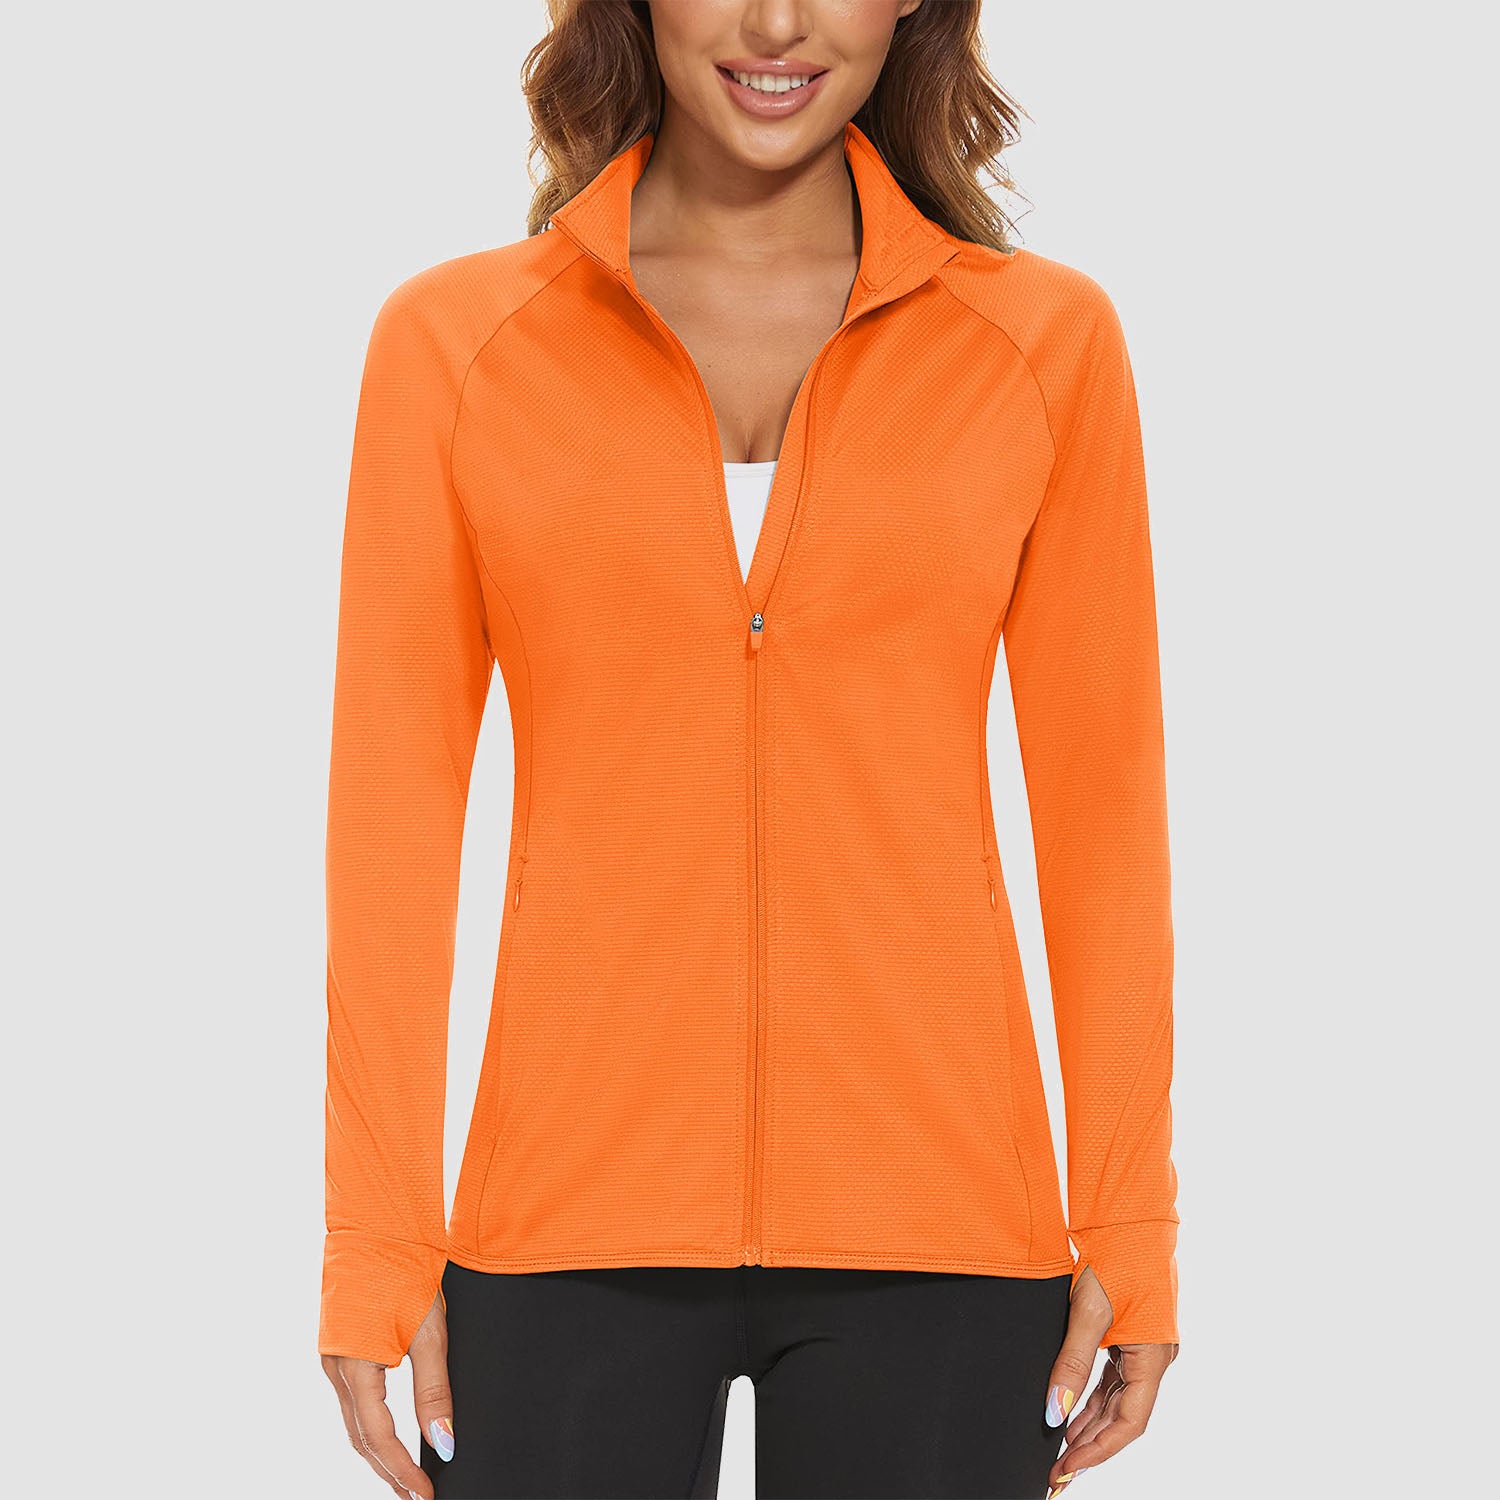 Women's Sun Protection Jacket Lightweight Long Sleeve UPF 50+ Shirts Hiking Shirt with Zipper Pockets